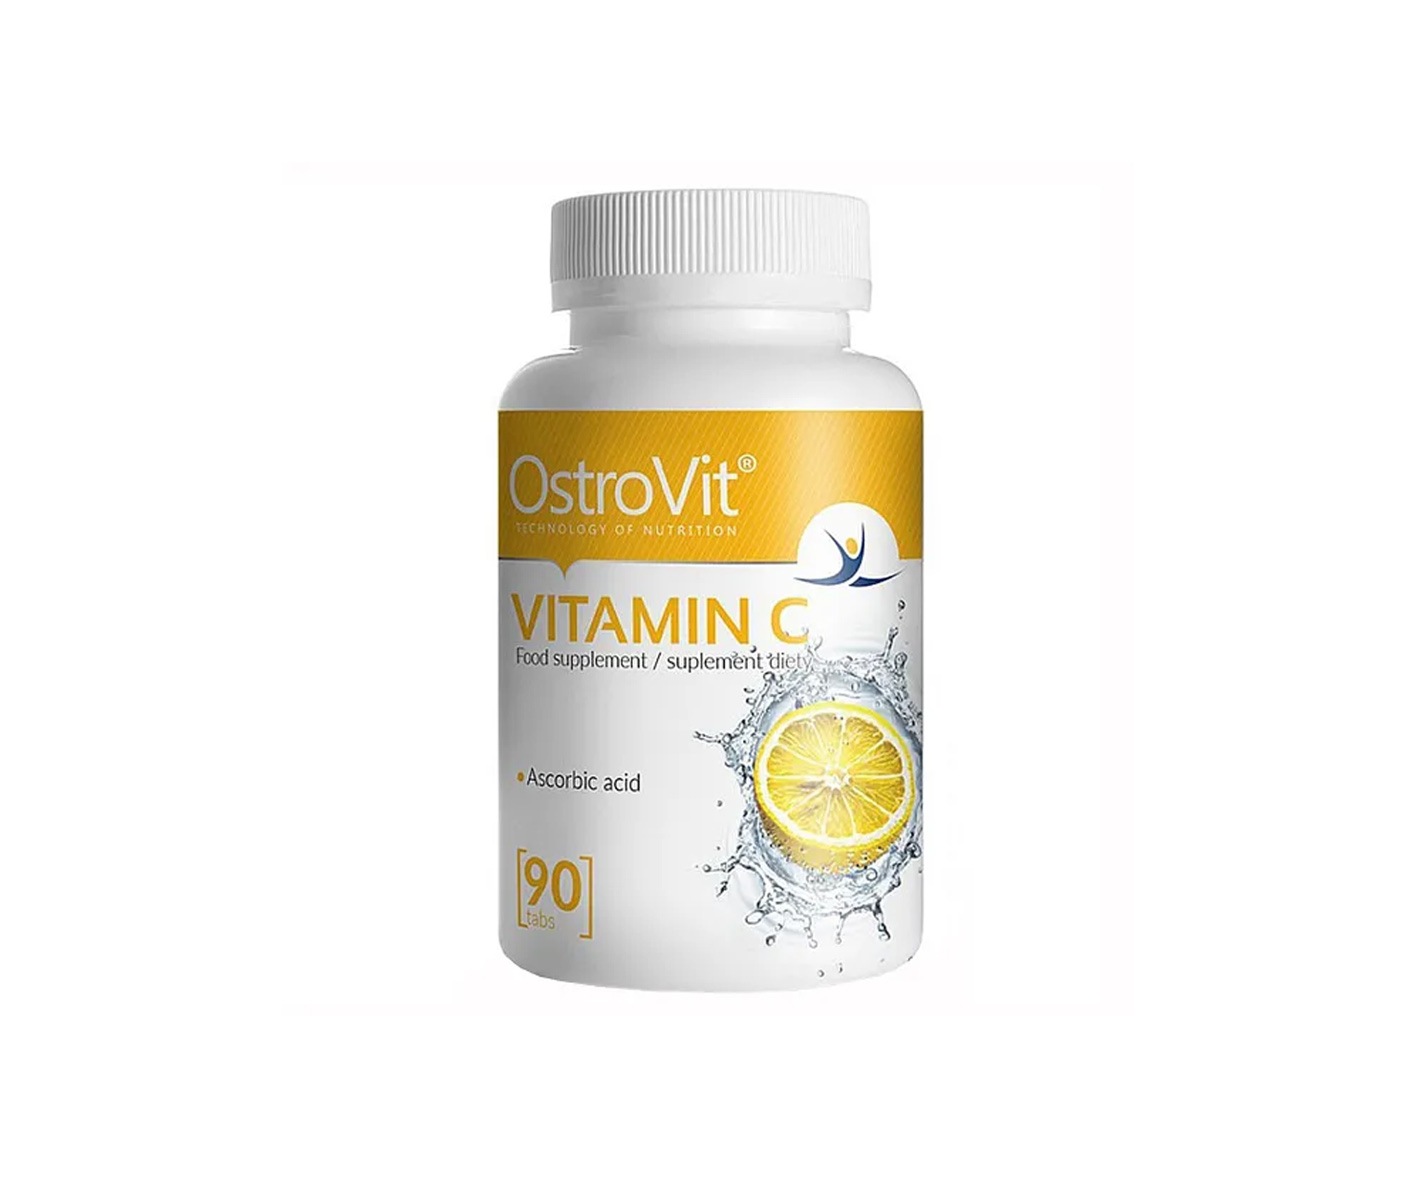 OstroVit, Vitamin C, tablets for immunity